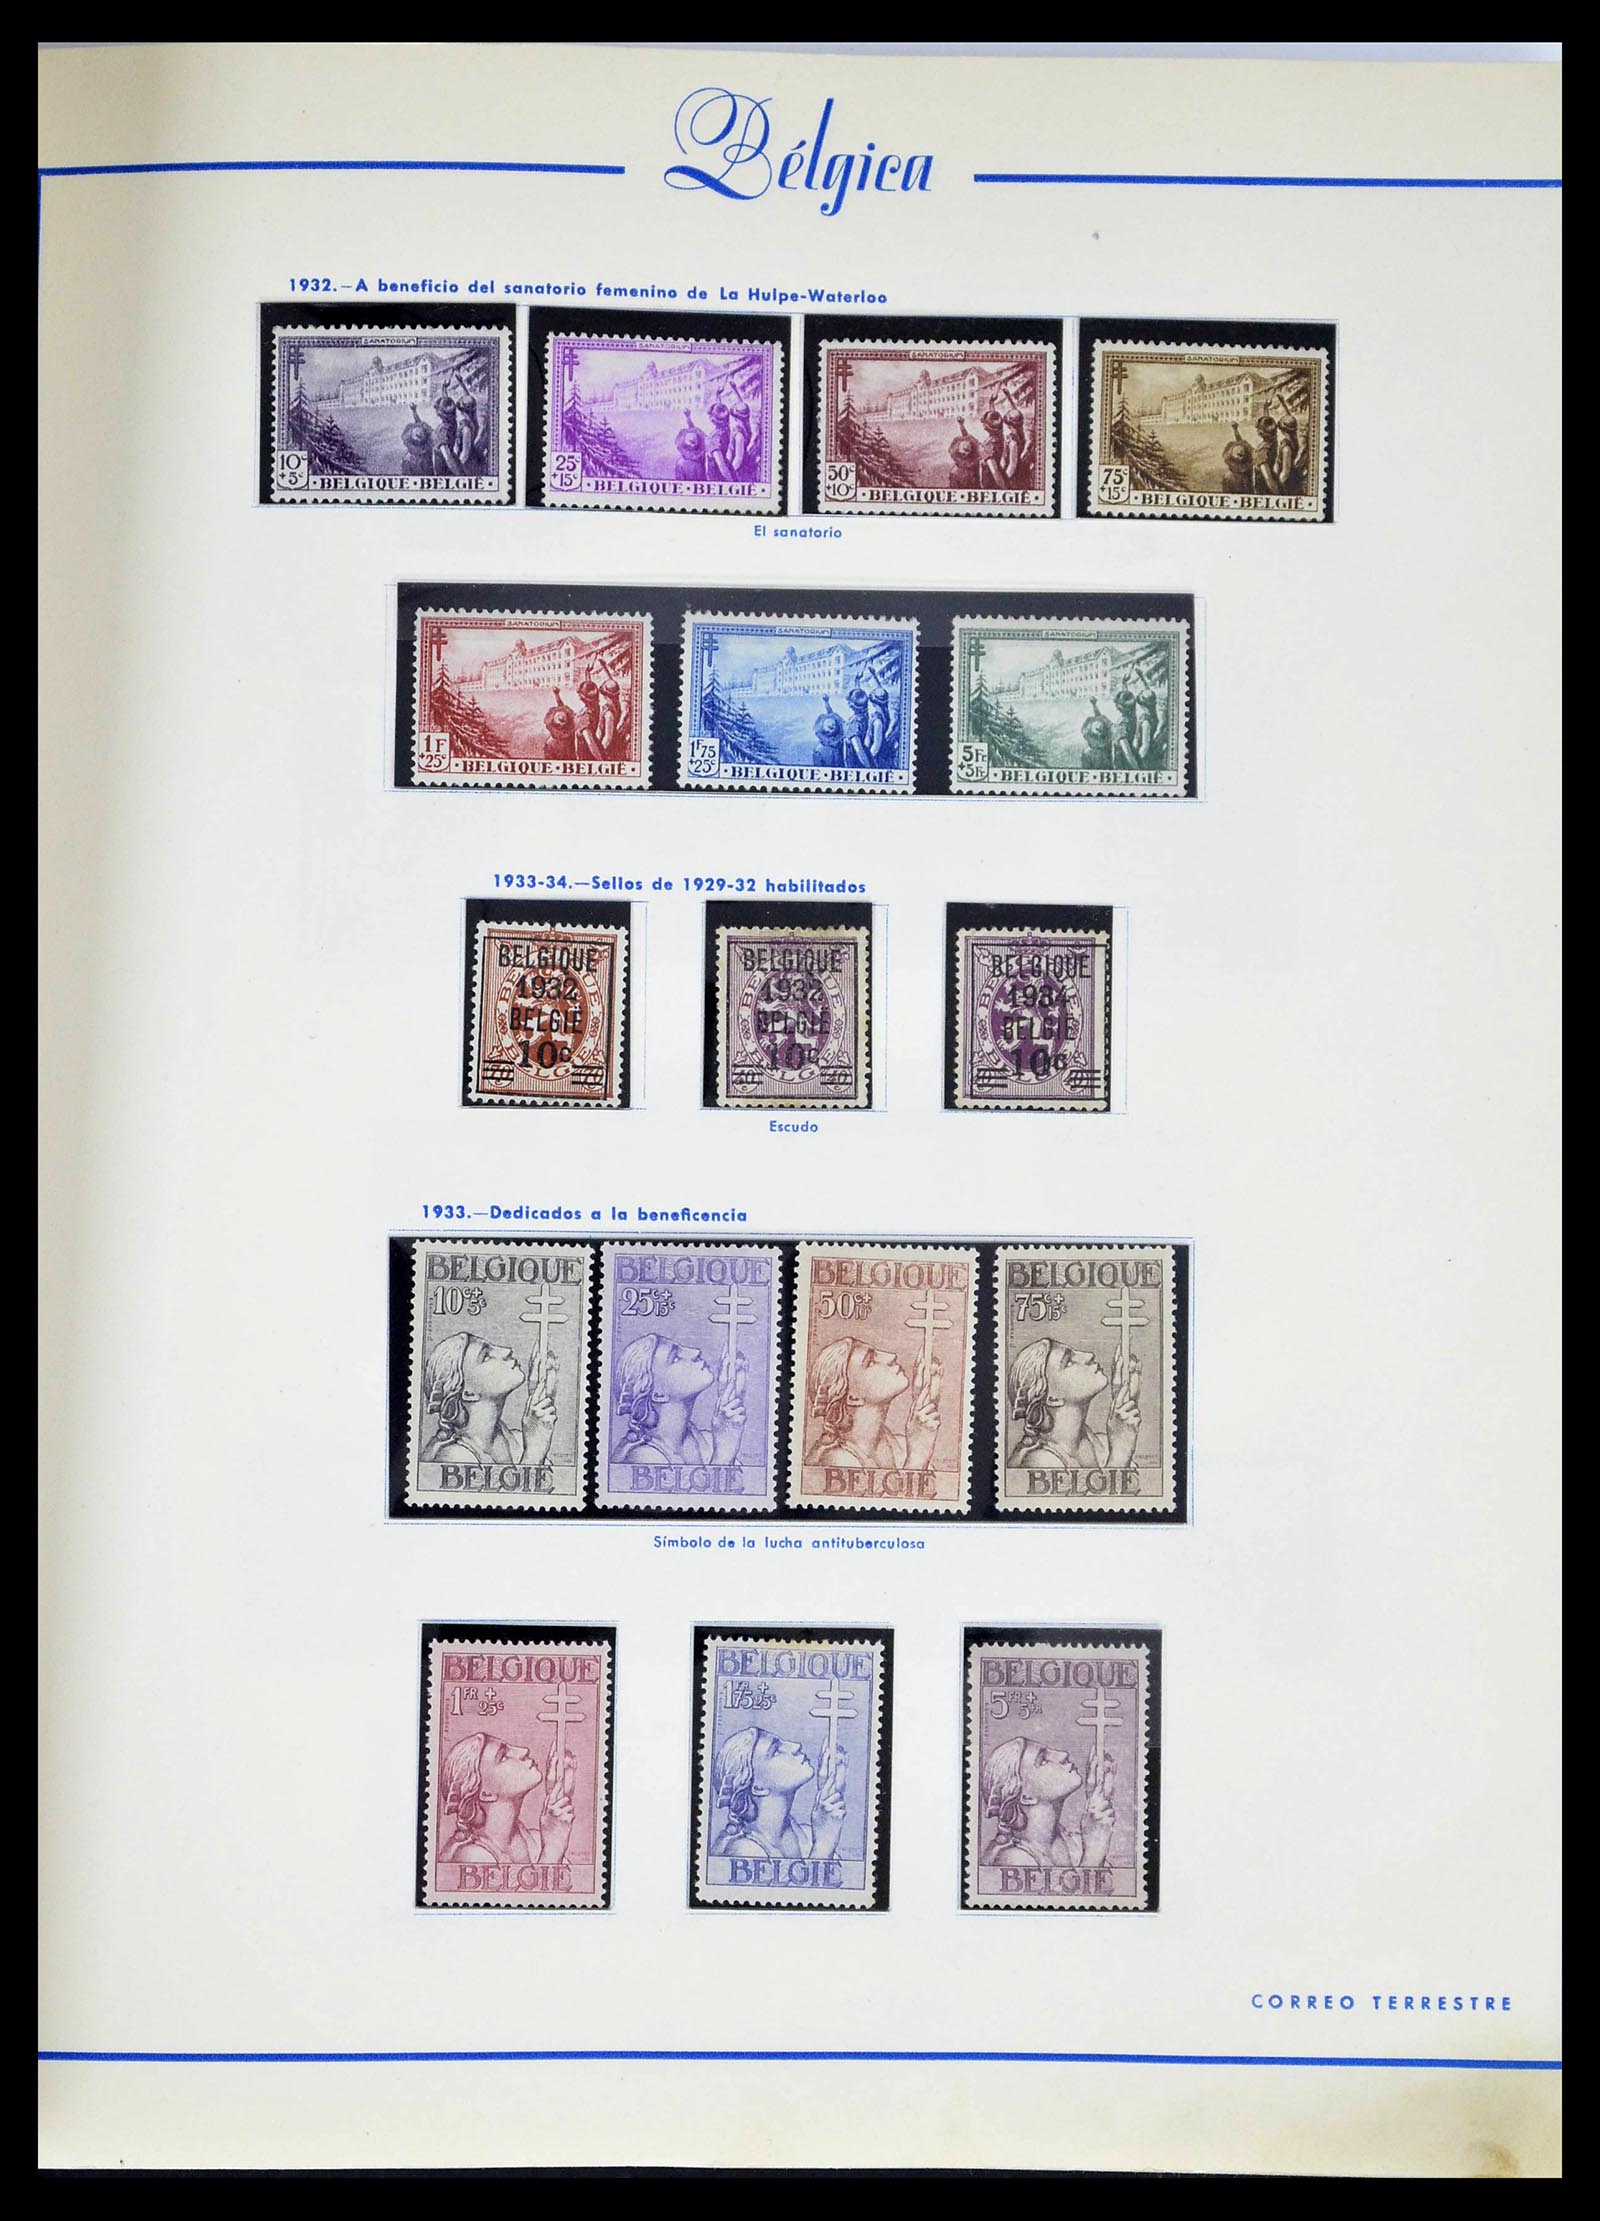 39230 0025 - Stamp collection 39230 Belgium 1849-1976.